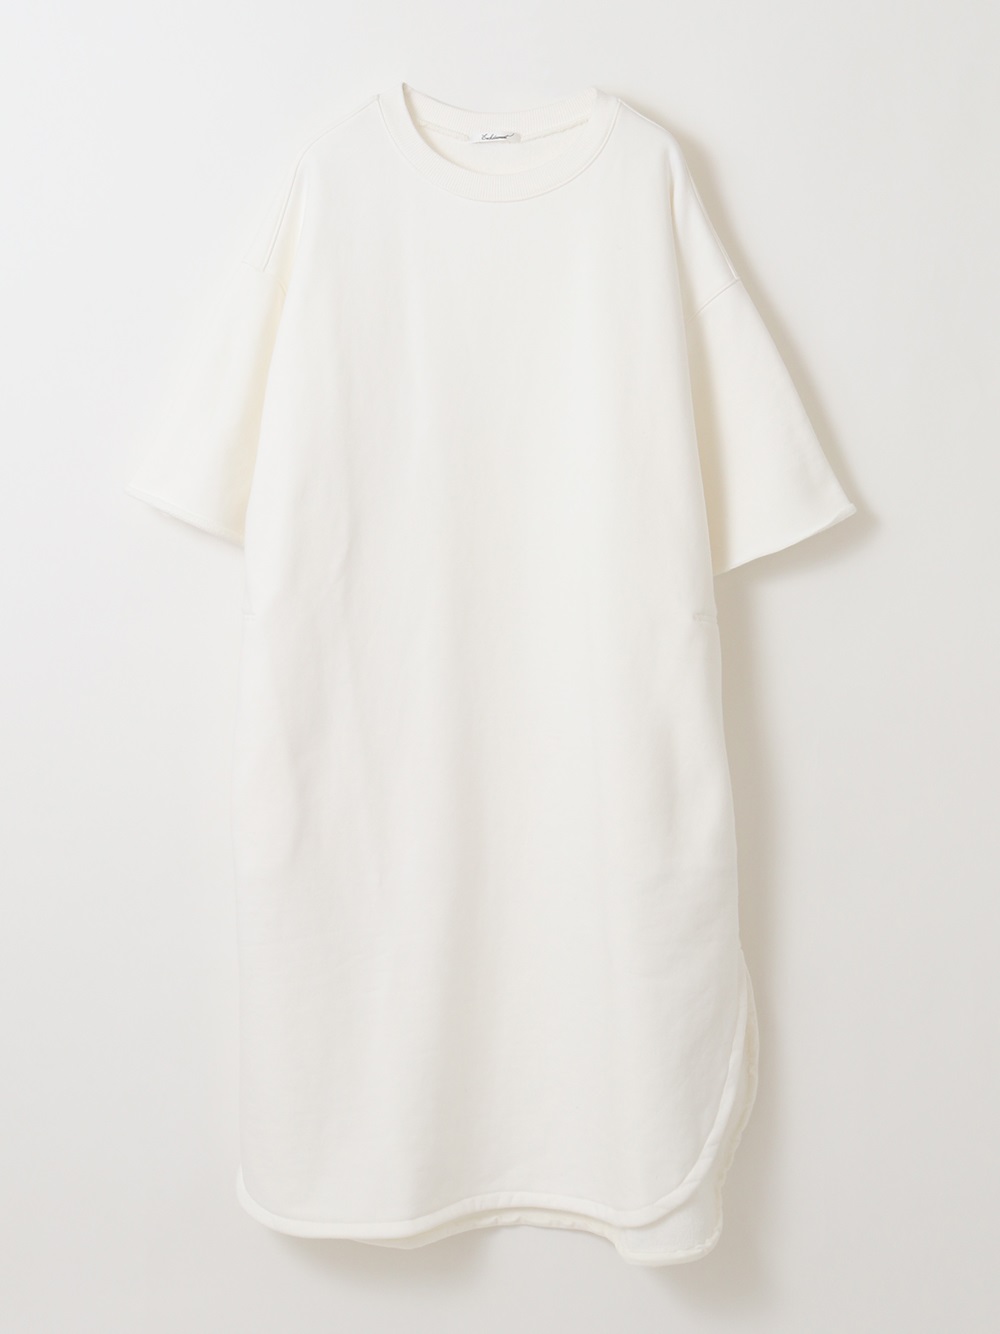 Sweat shirt dress(02ホワイト-フリー)